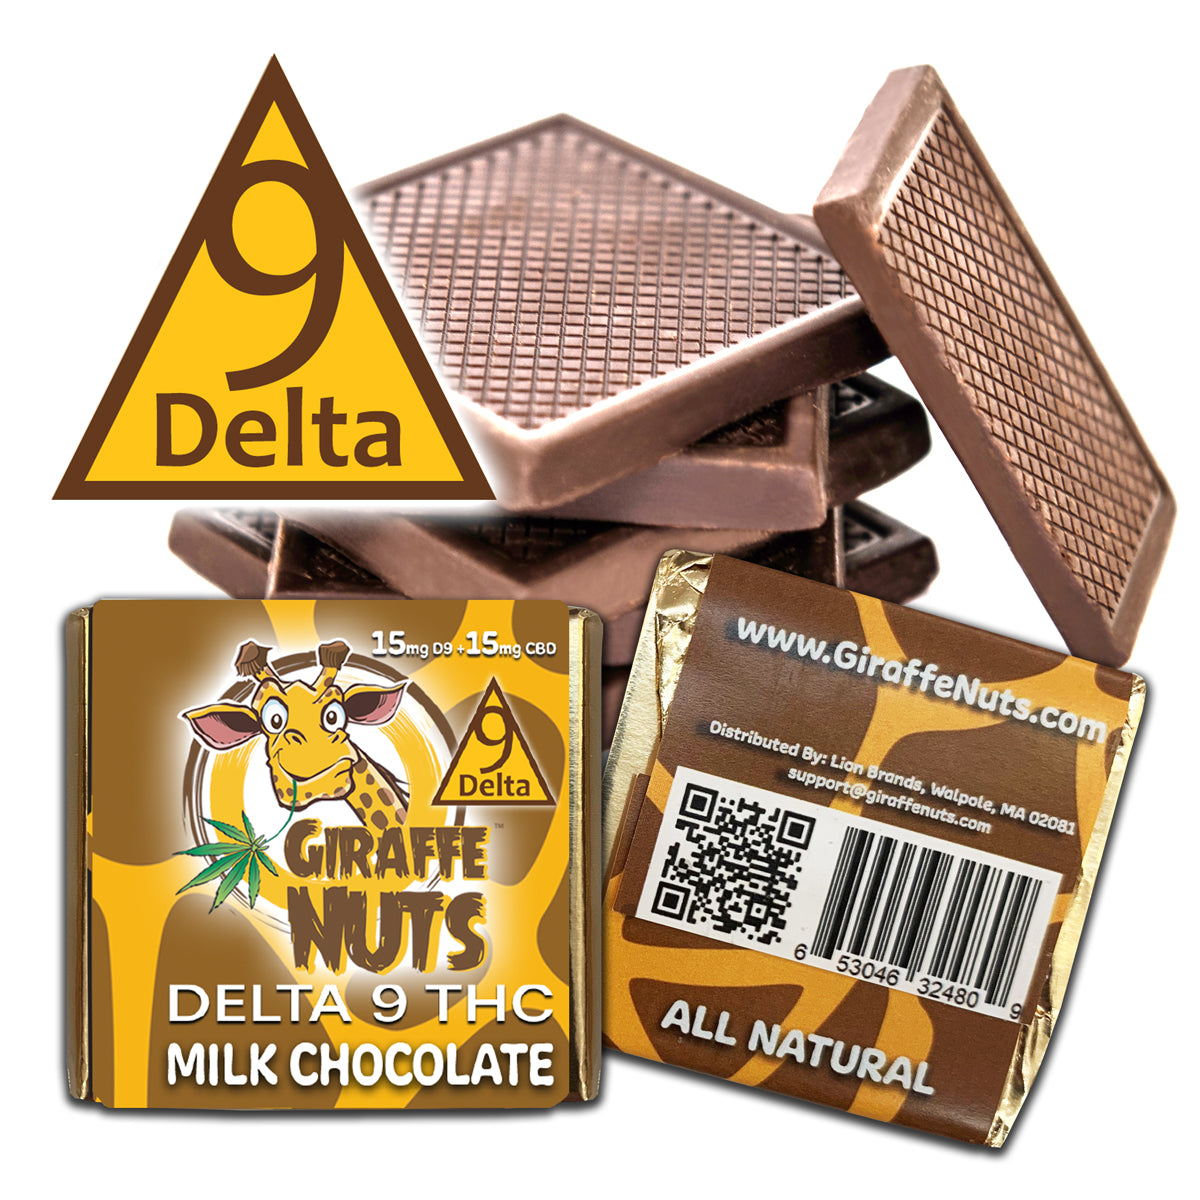 Giraffe Nuts Delta 9 & CBD Chocolate Squares